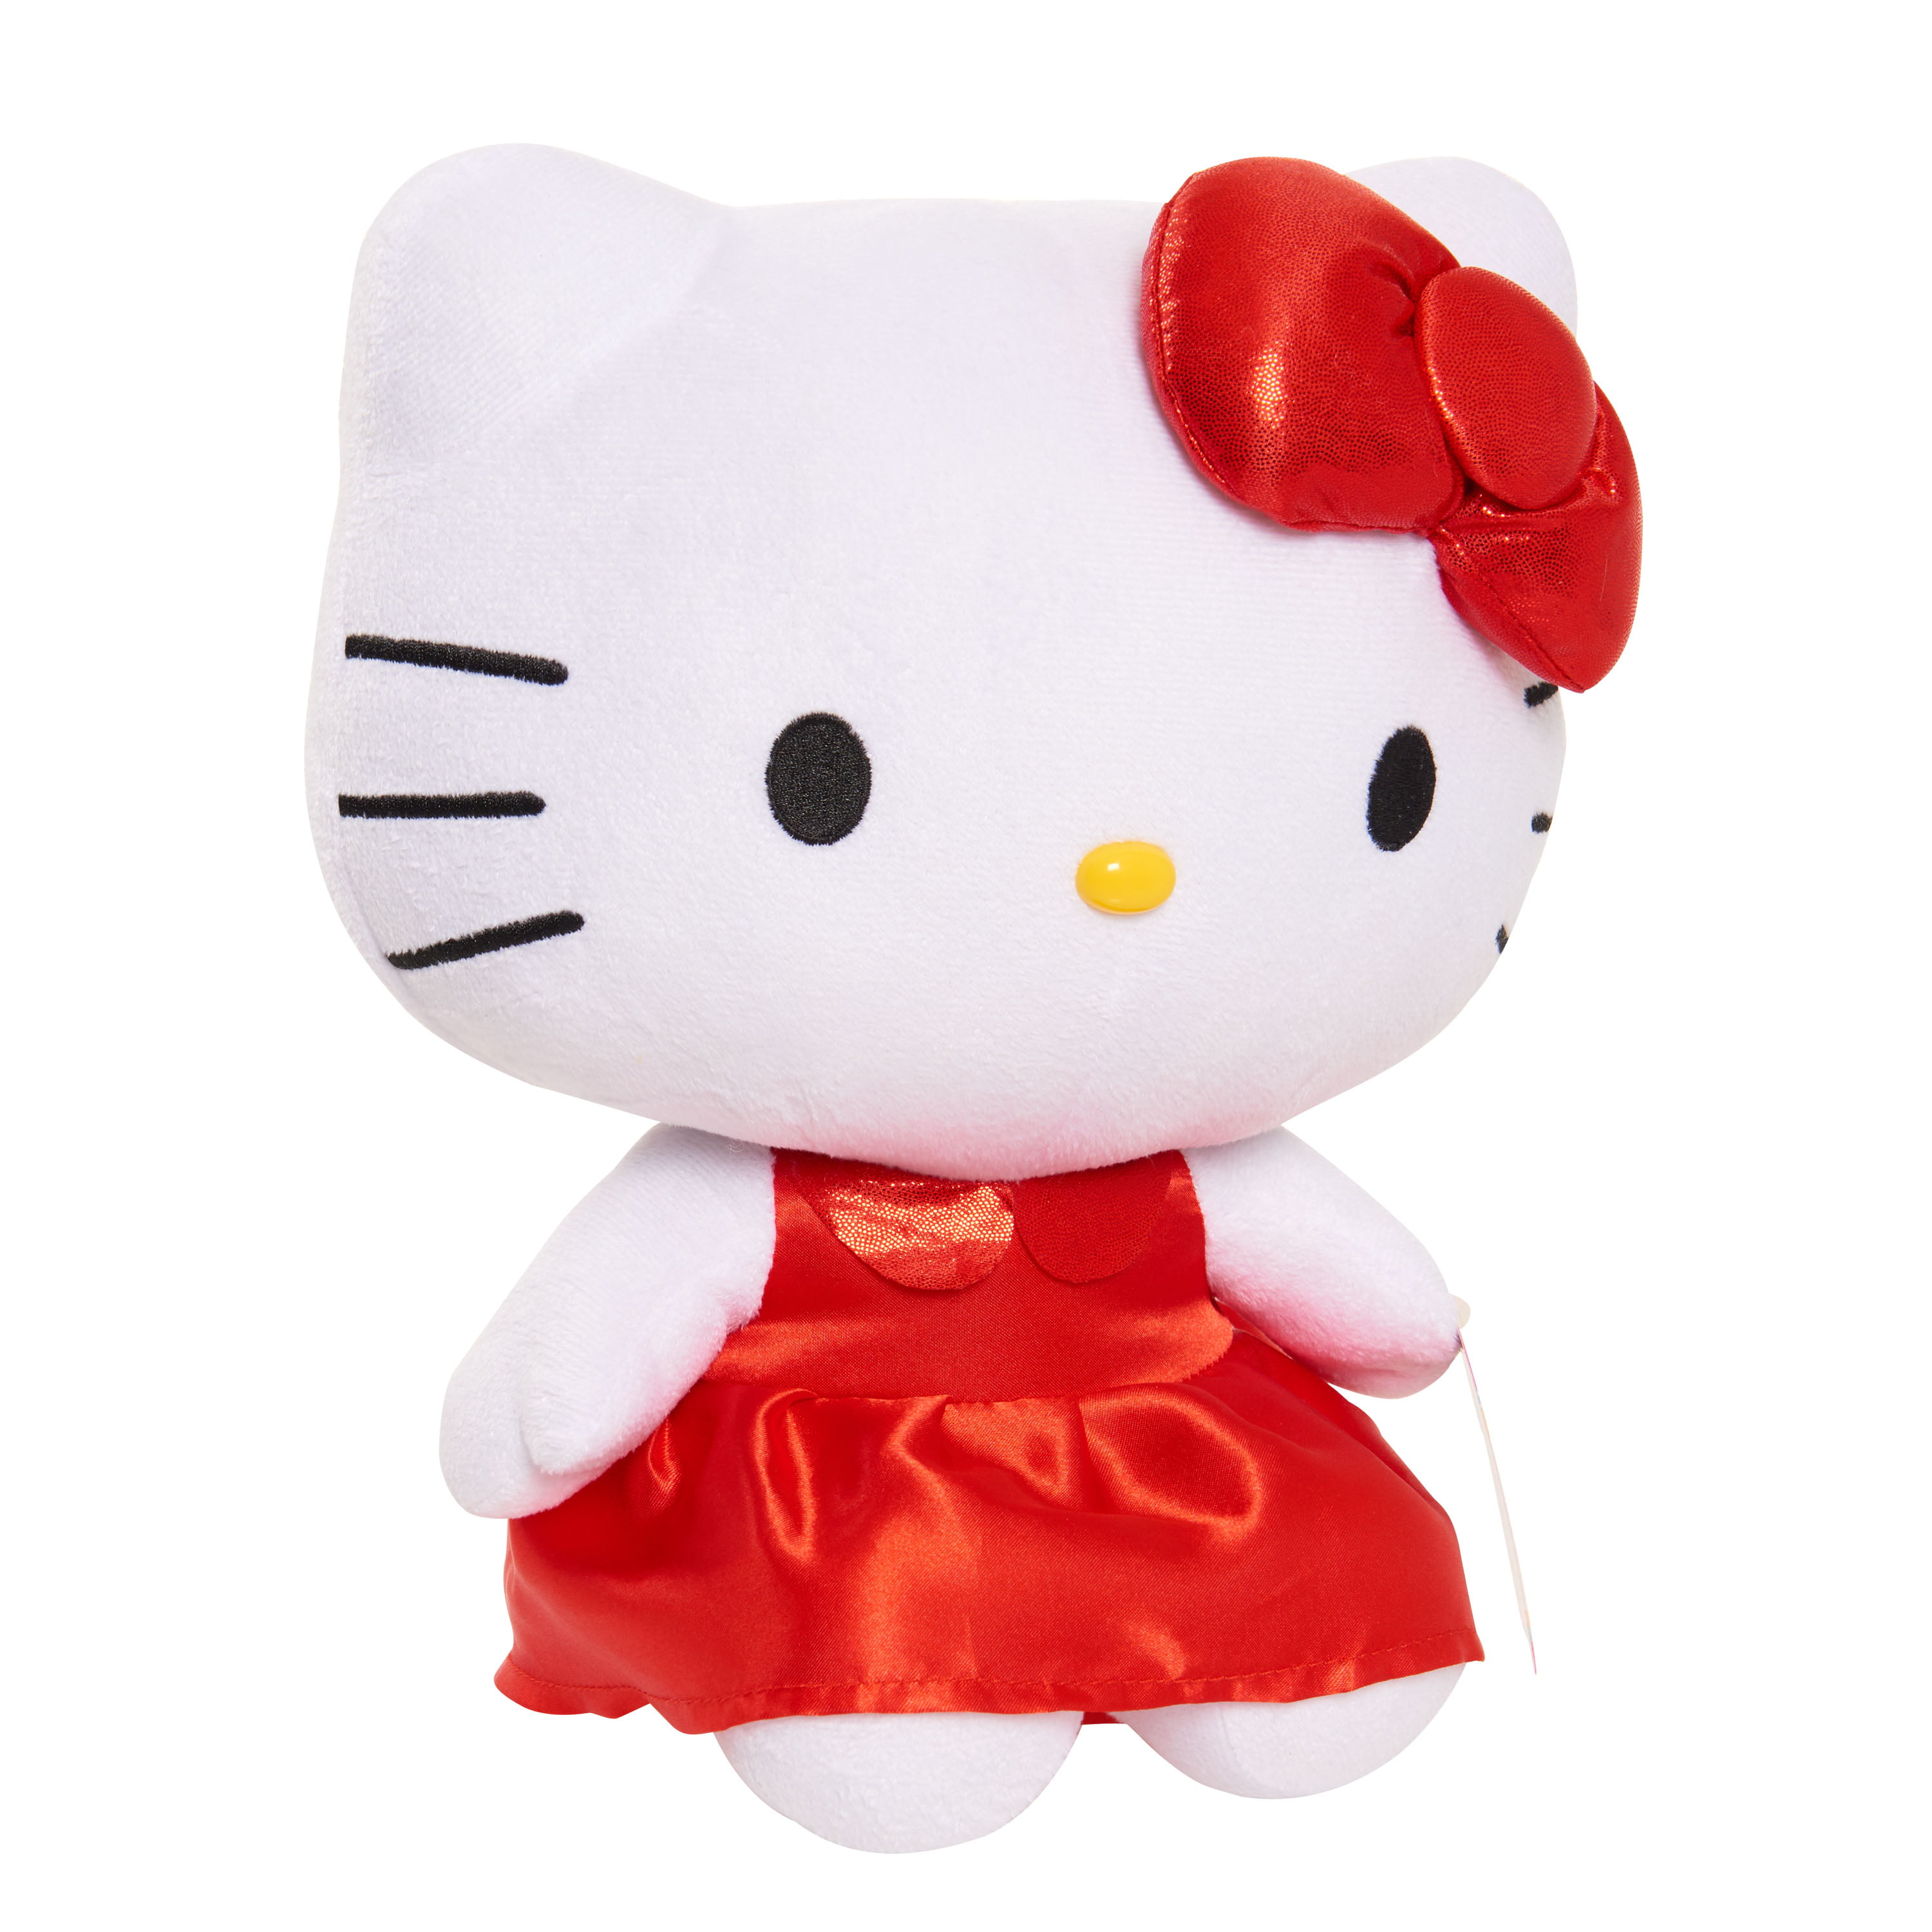  Hello Kitty Plush  Hello  Kitty  in Red Dress Walmart com 